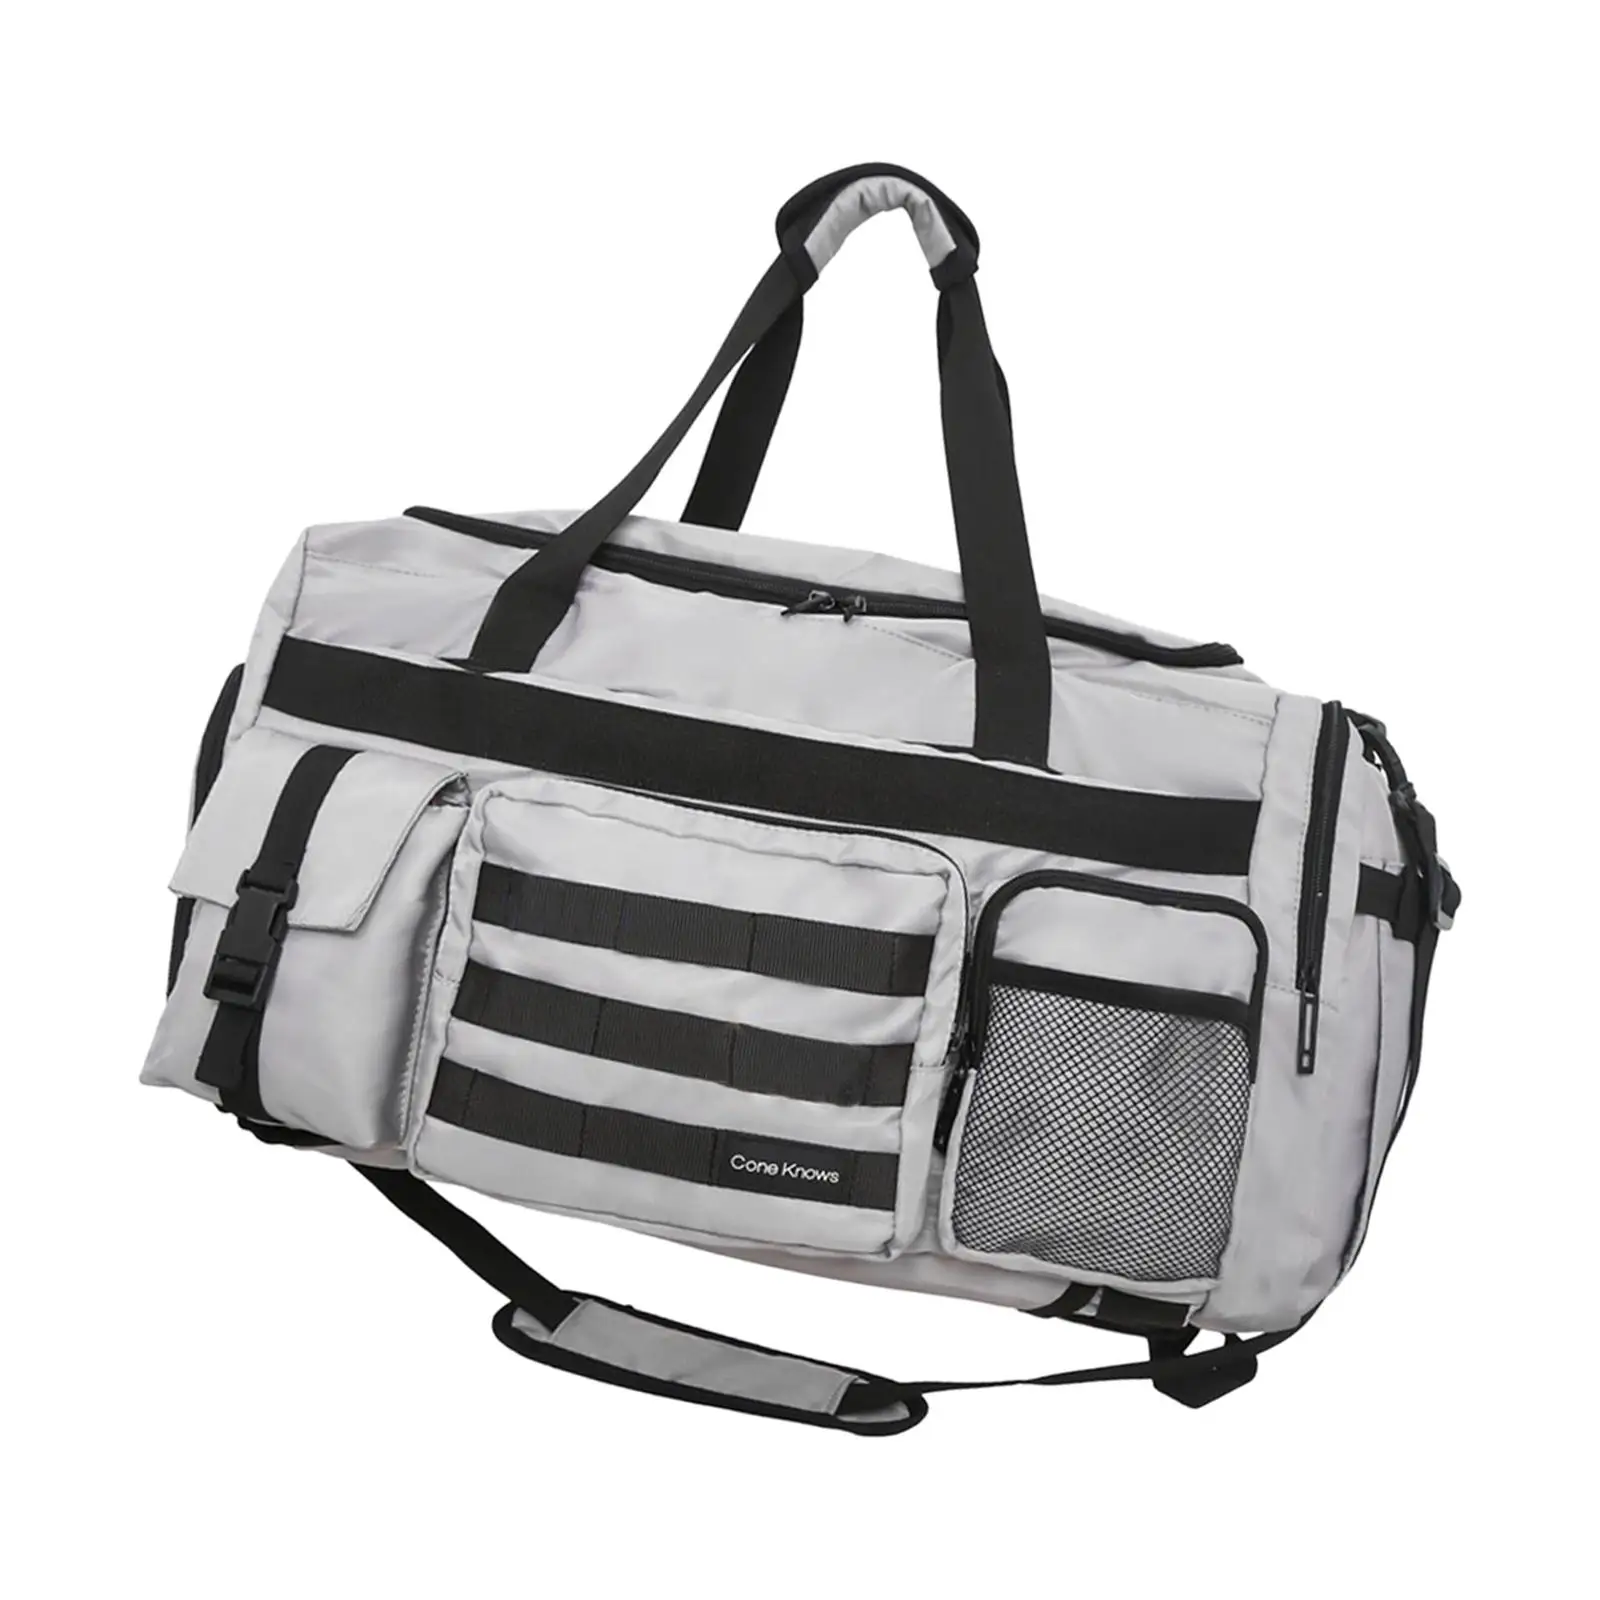 Duffle Backpack Sports Gym Bag Tote Bag Apparel Yoga Bag Multipurpose Shoulder Bag for Exercise Fitness Weekend Camping Outddor